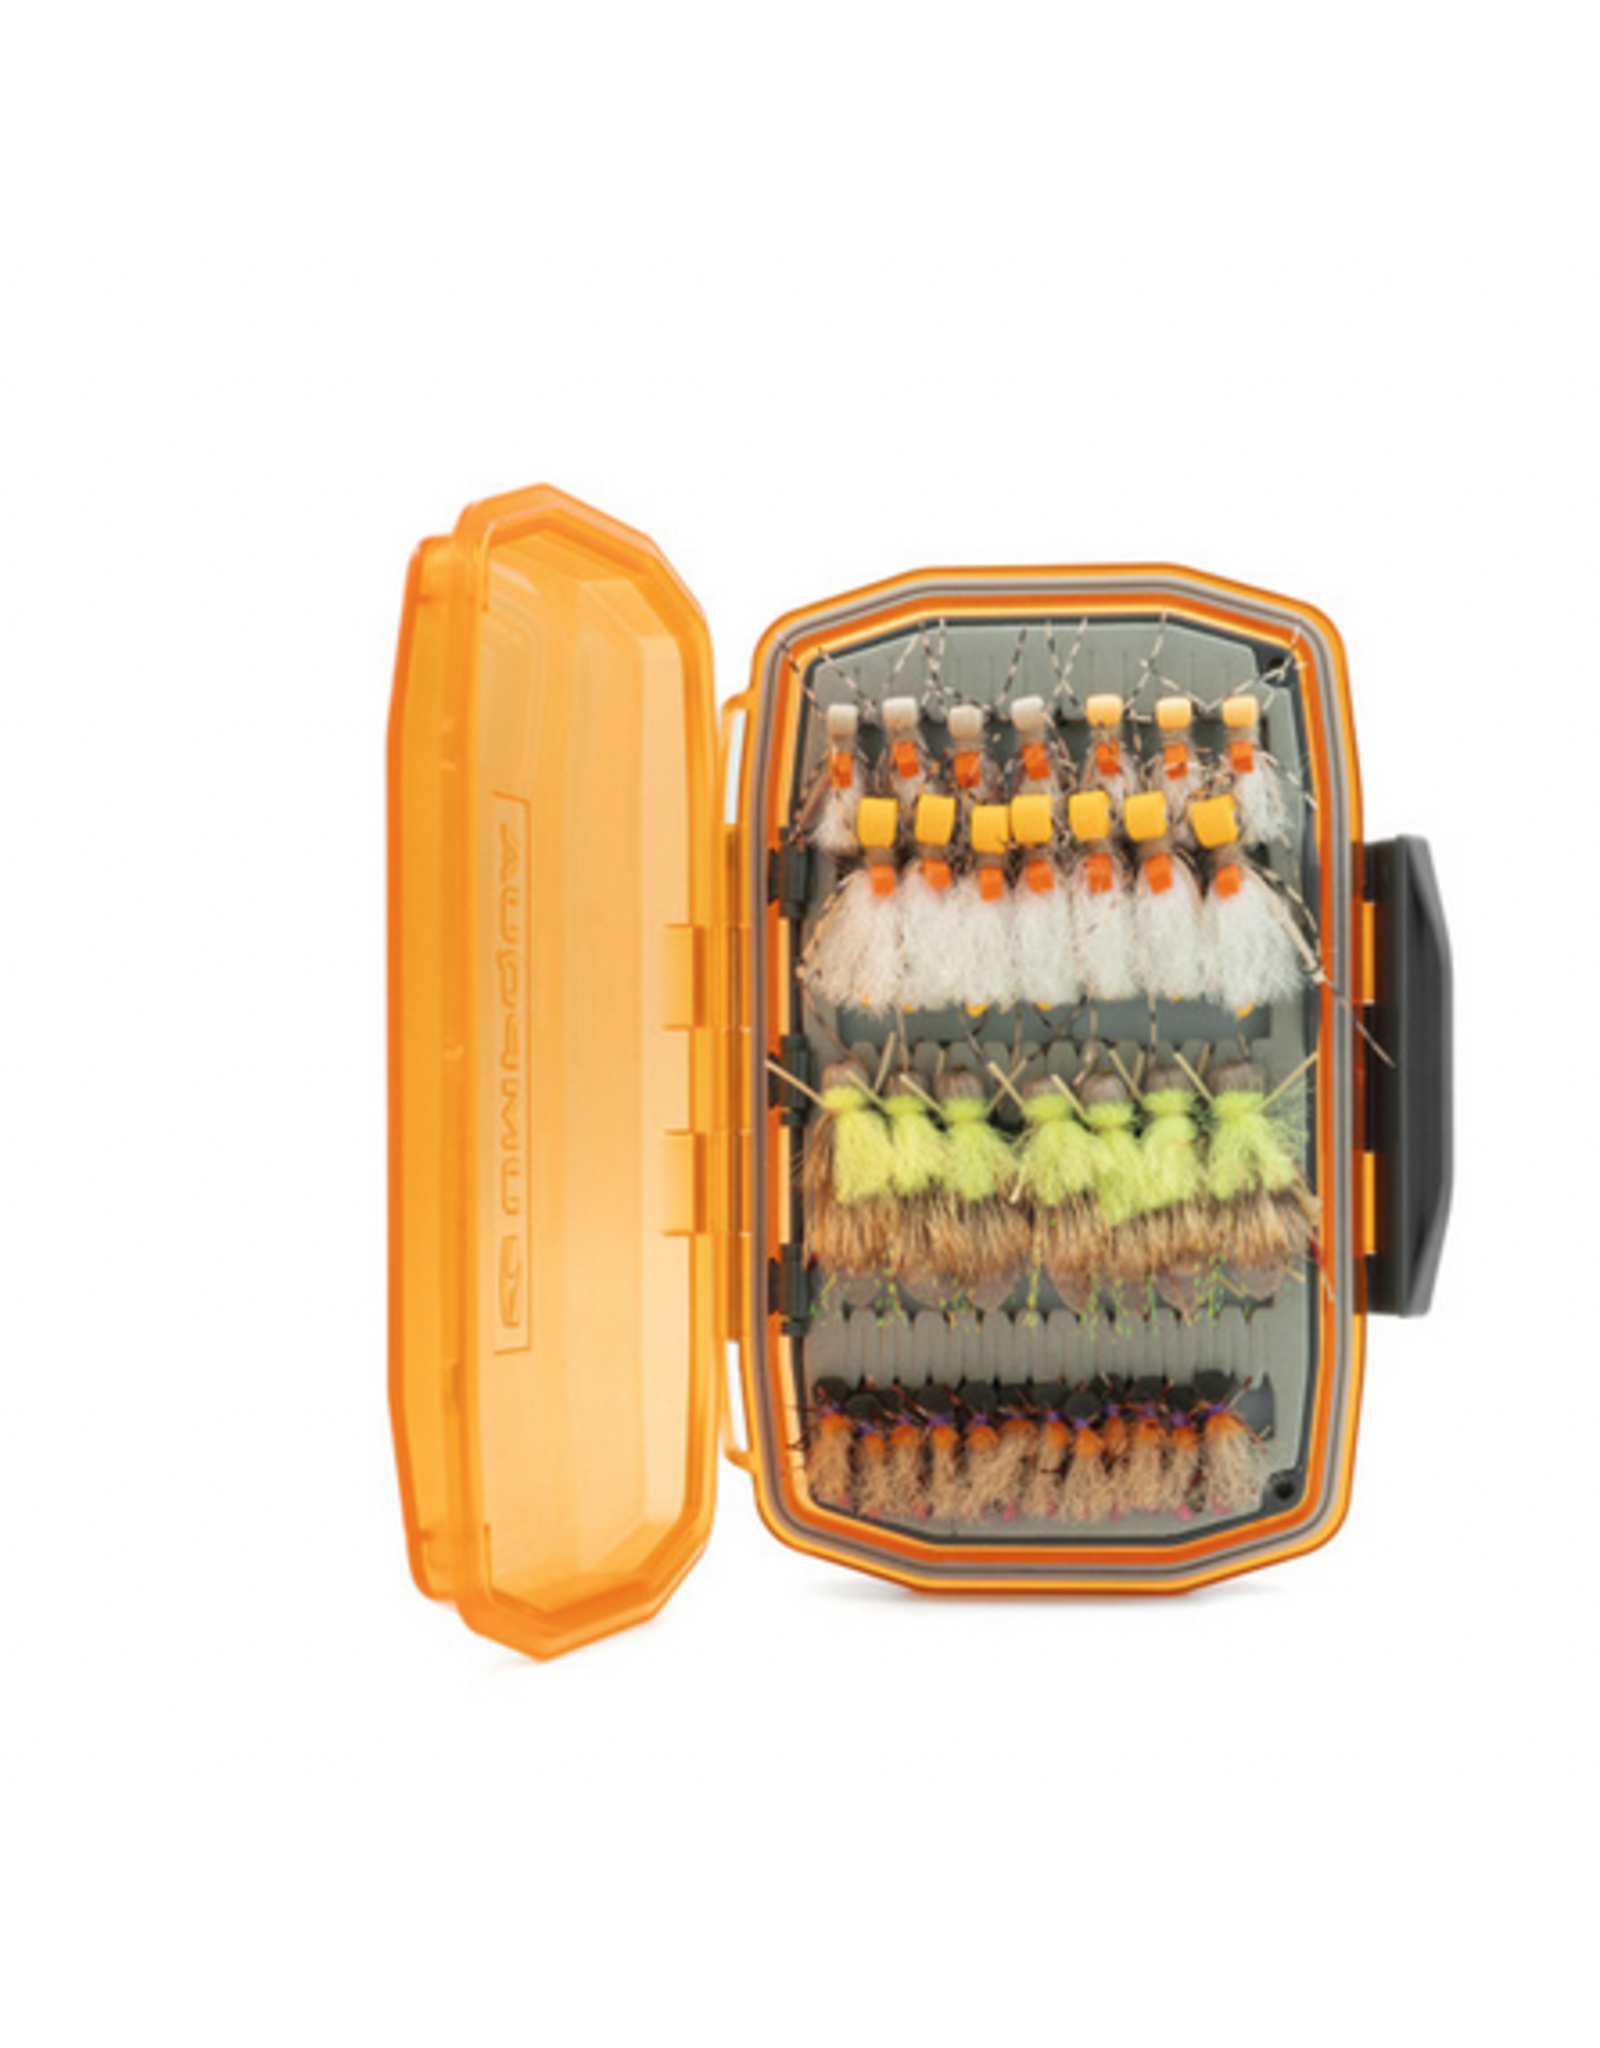 Umpqua UPG Foam Waterproof Essential Fly Box - Medium - Hot Orange